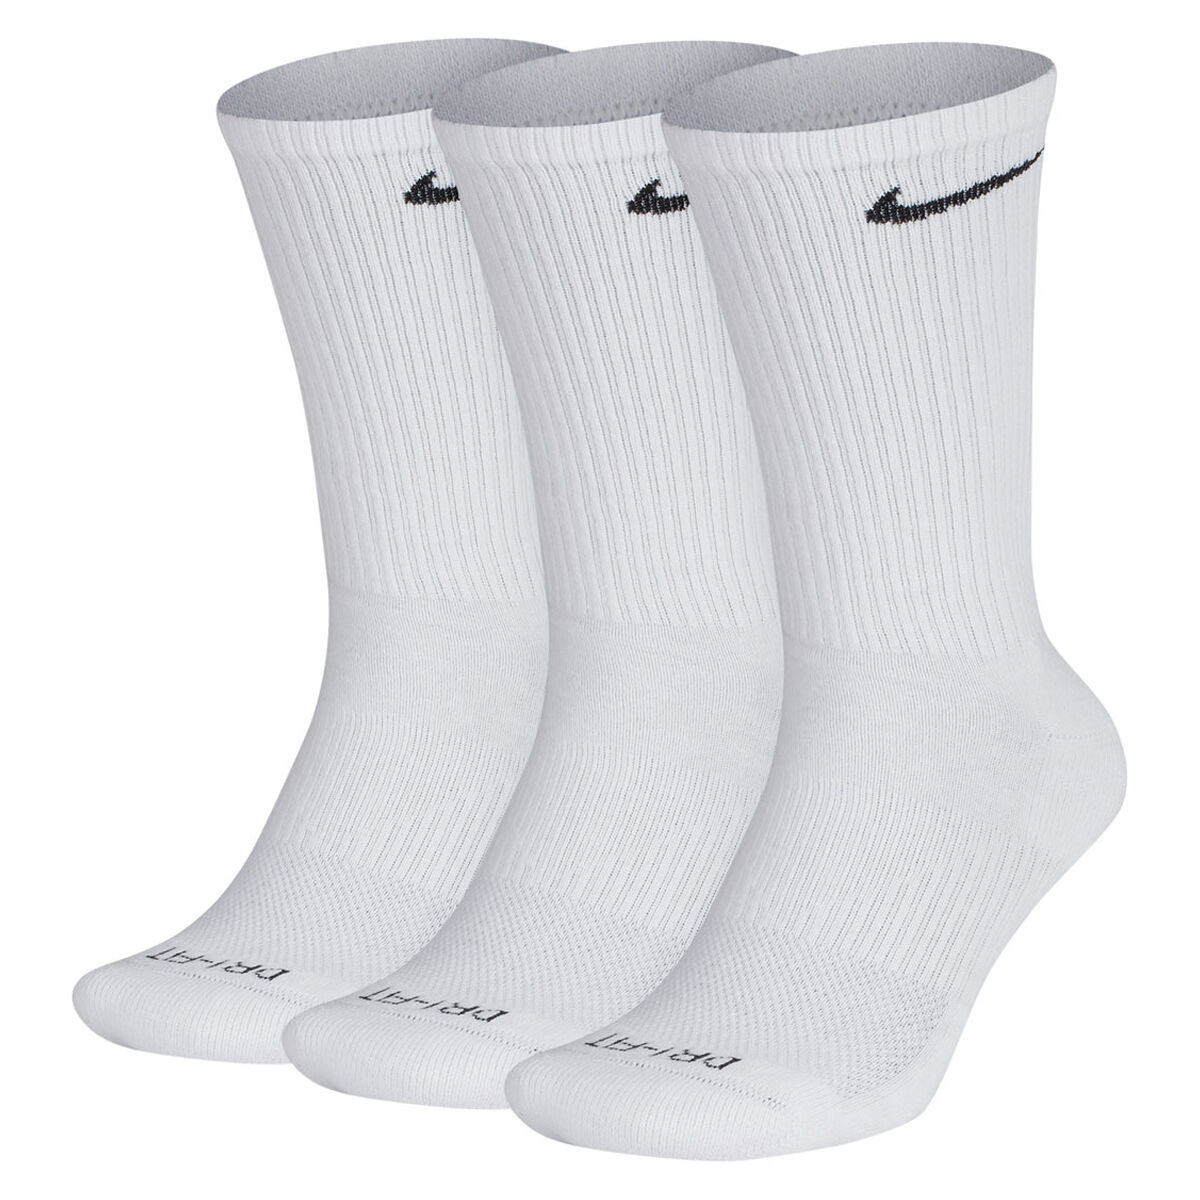 Nike Mens Cushion Crew 3 Pack Socks 